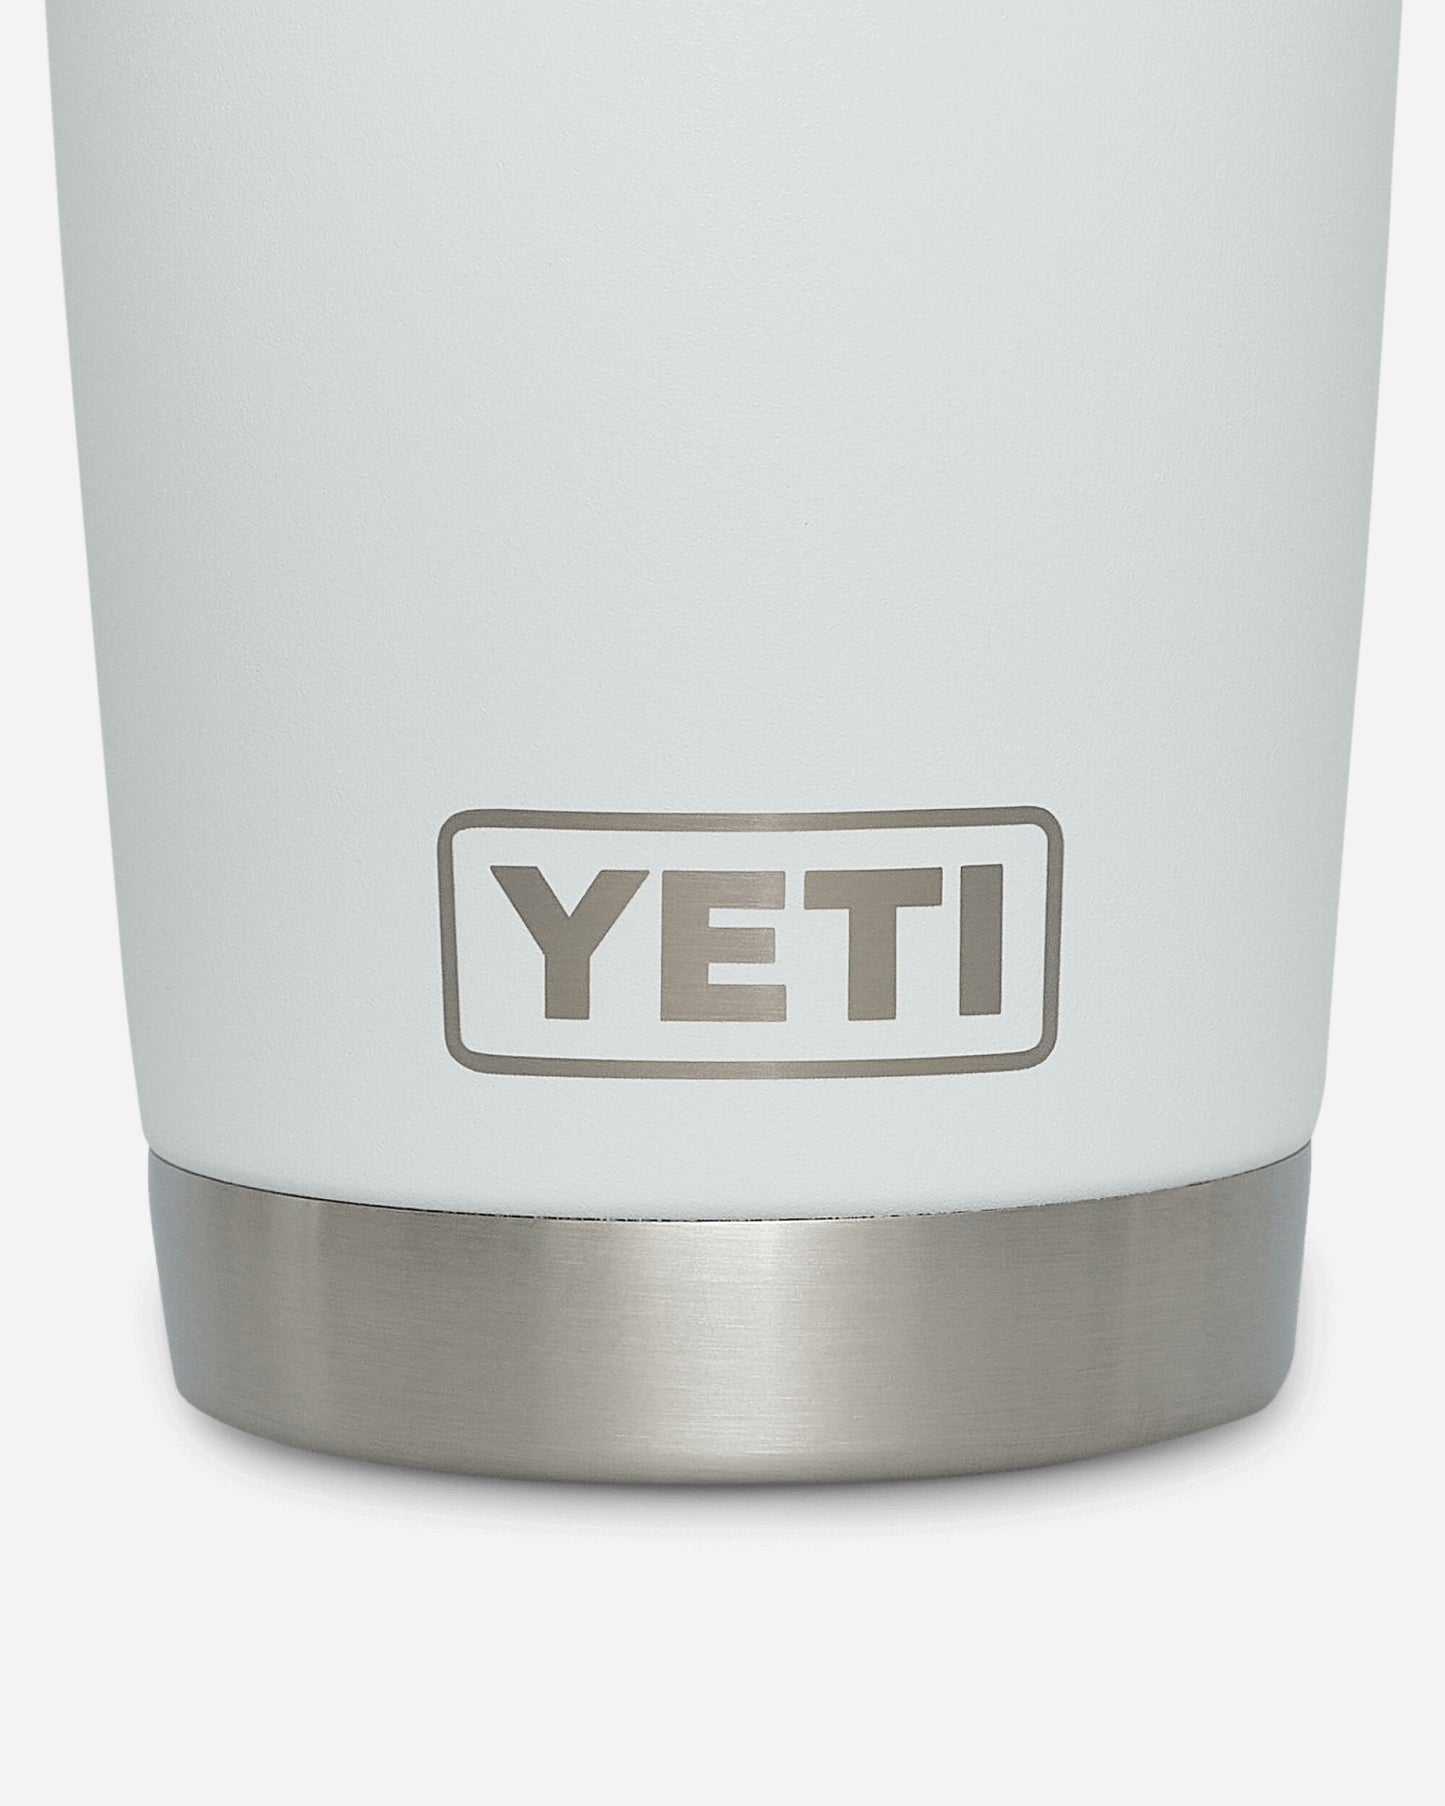 Yeti Rambler Tumbler White Equipment Bottles and Bowls 70000000071 WHITE